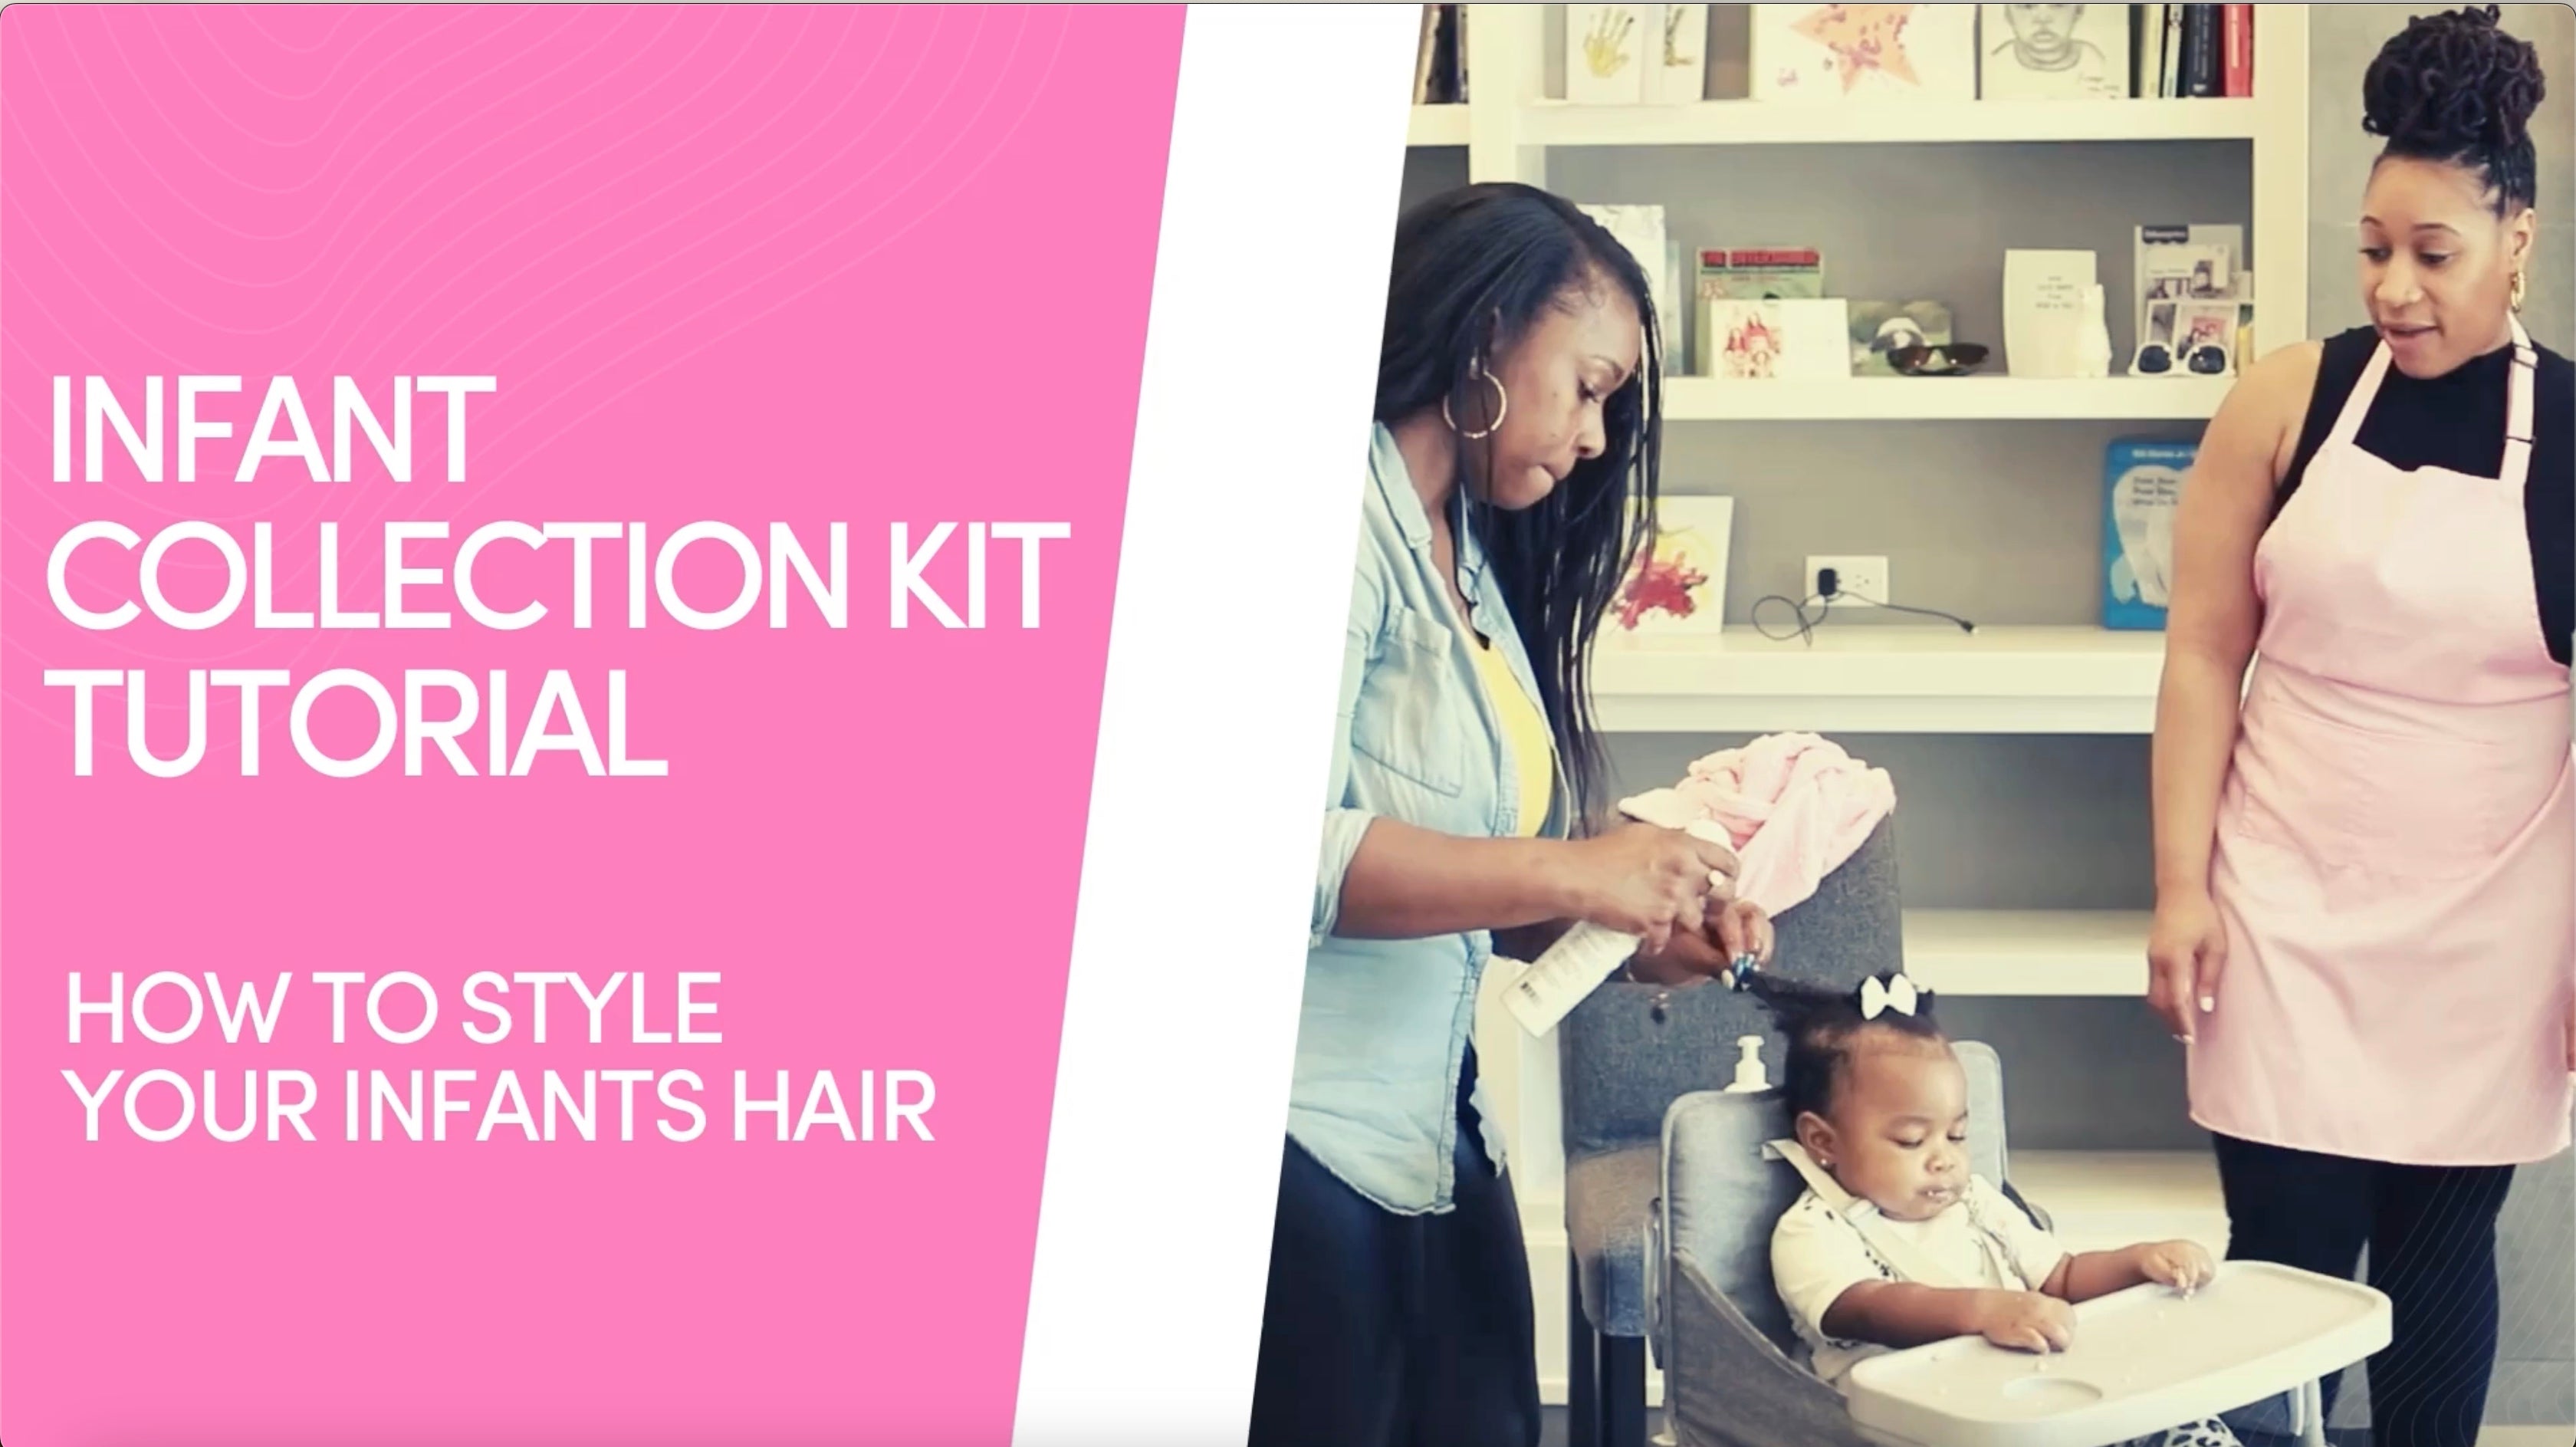 Load video: Reagan Sanai Essentials Infant Collection Kit Tutorial